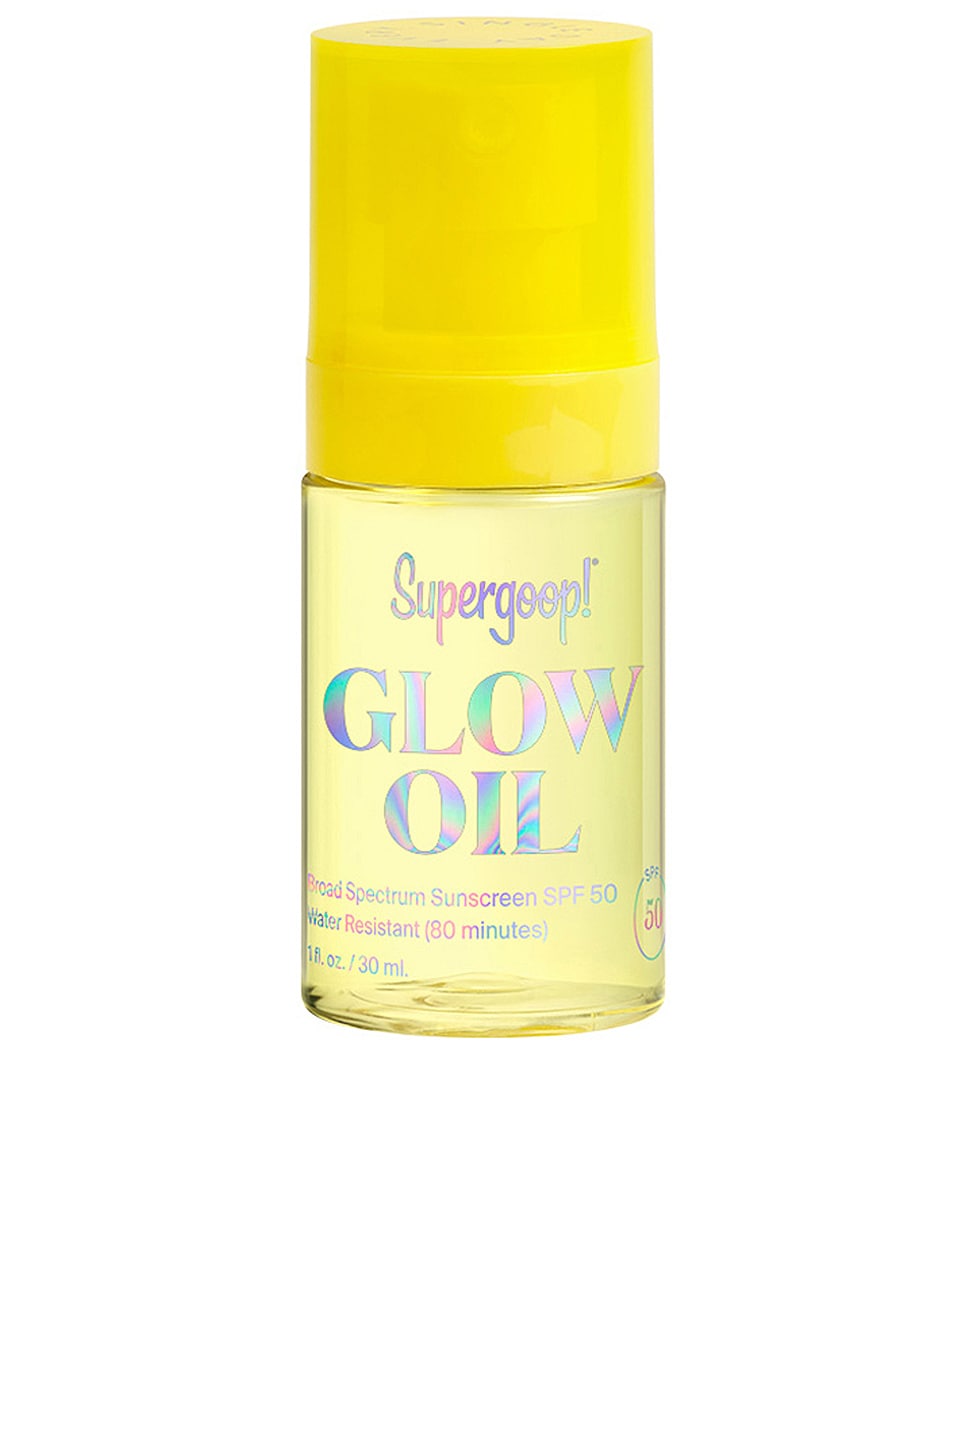 Supergoop ! Mini Glow Oil Spf 50 Pa++++ 1.0 oz/ 30 ml In Assorted